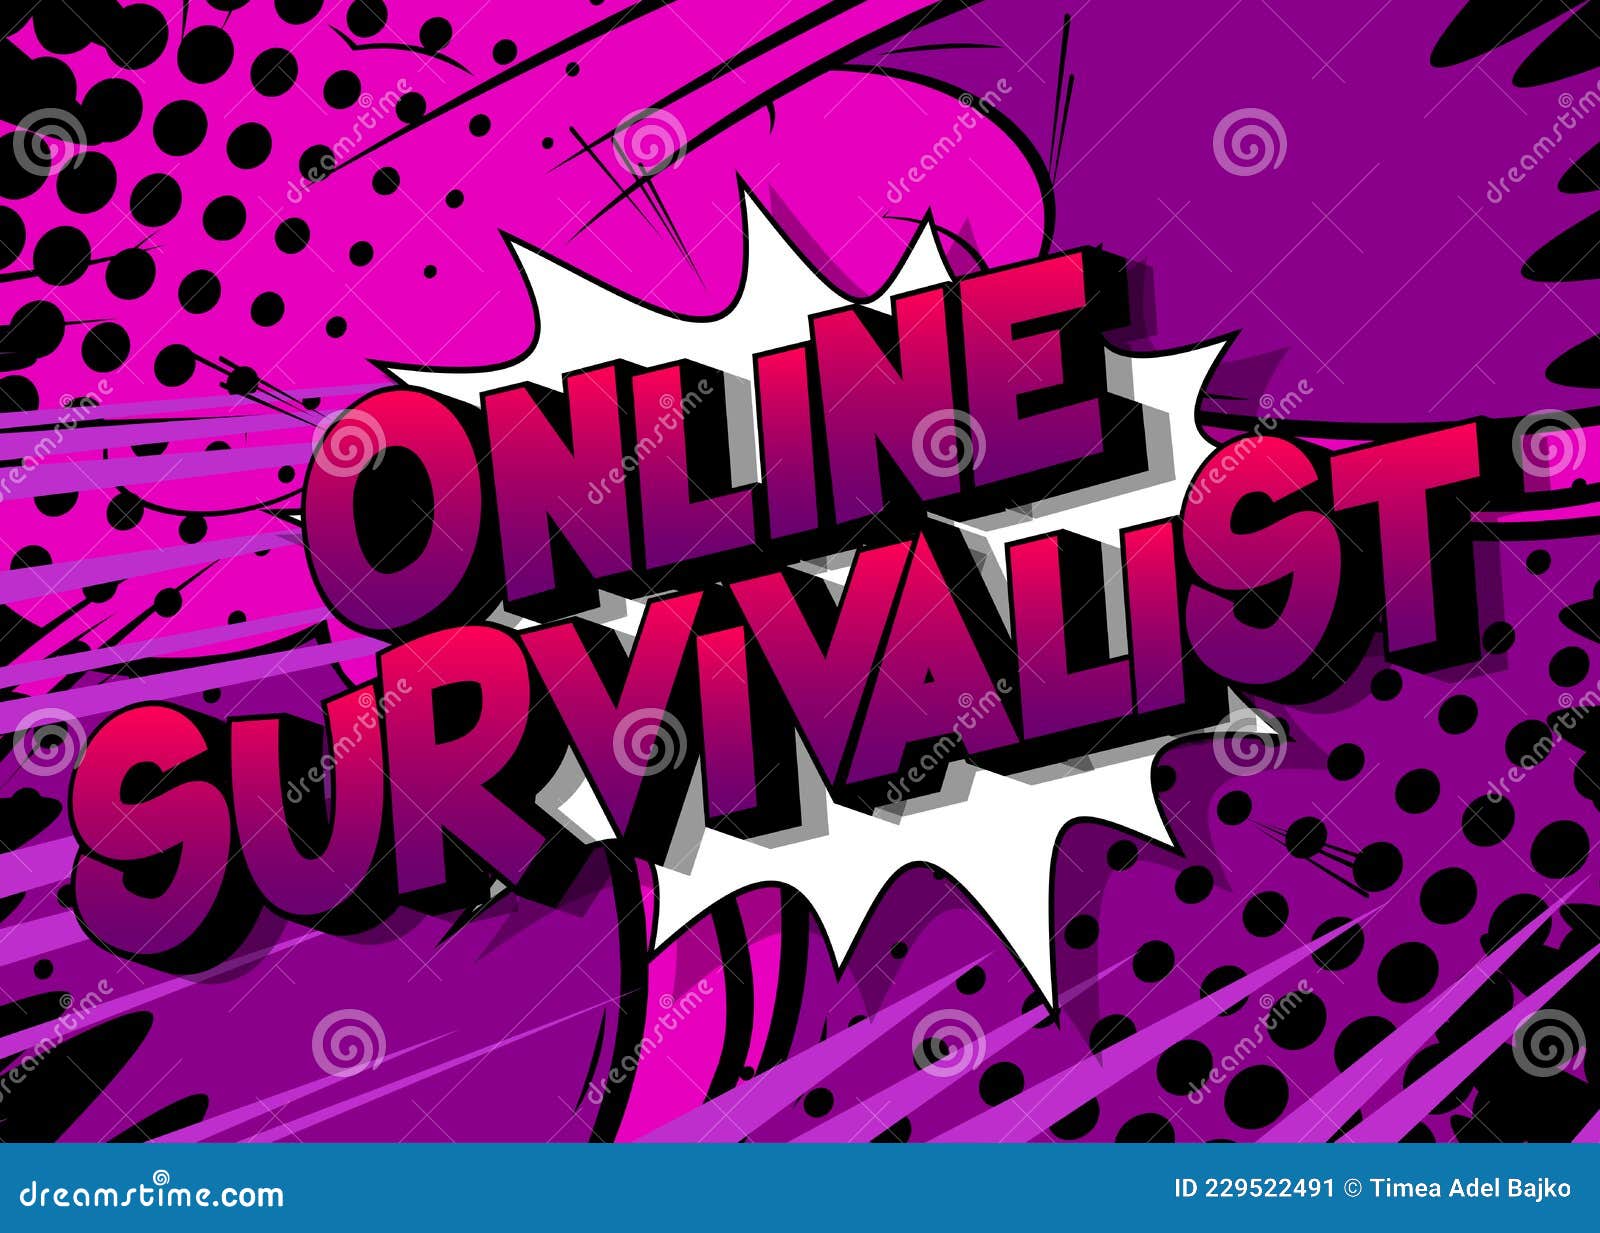 online survivalist. comic book style text.